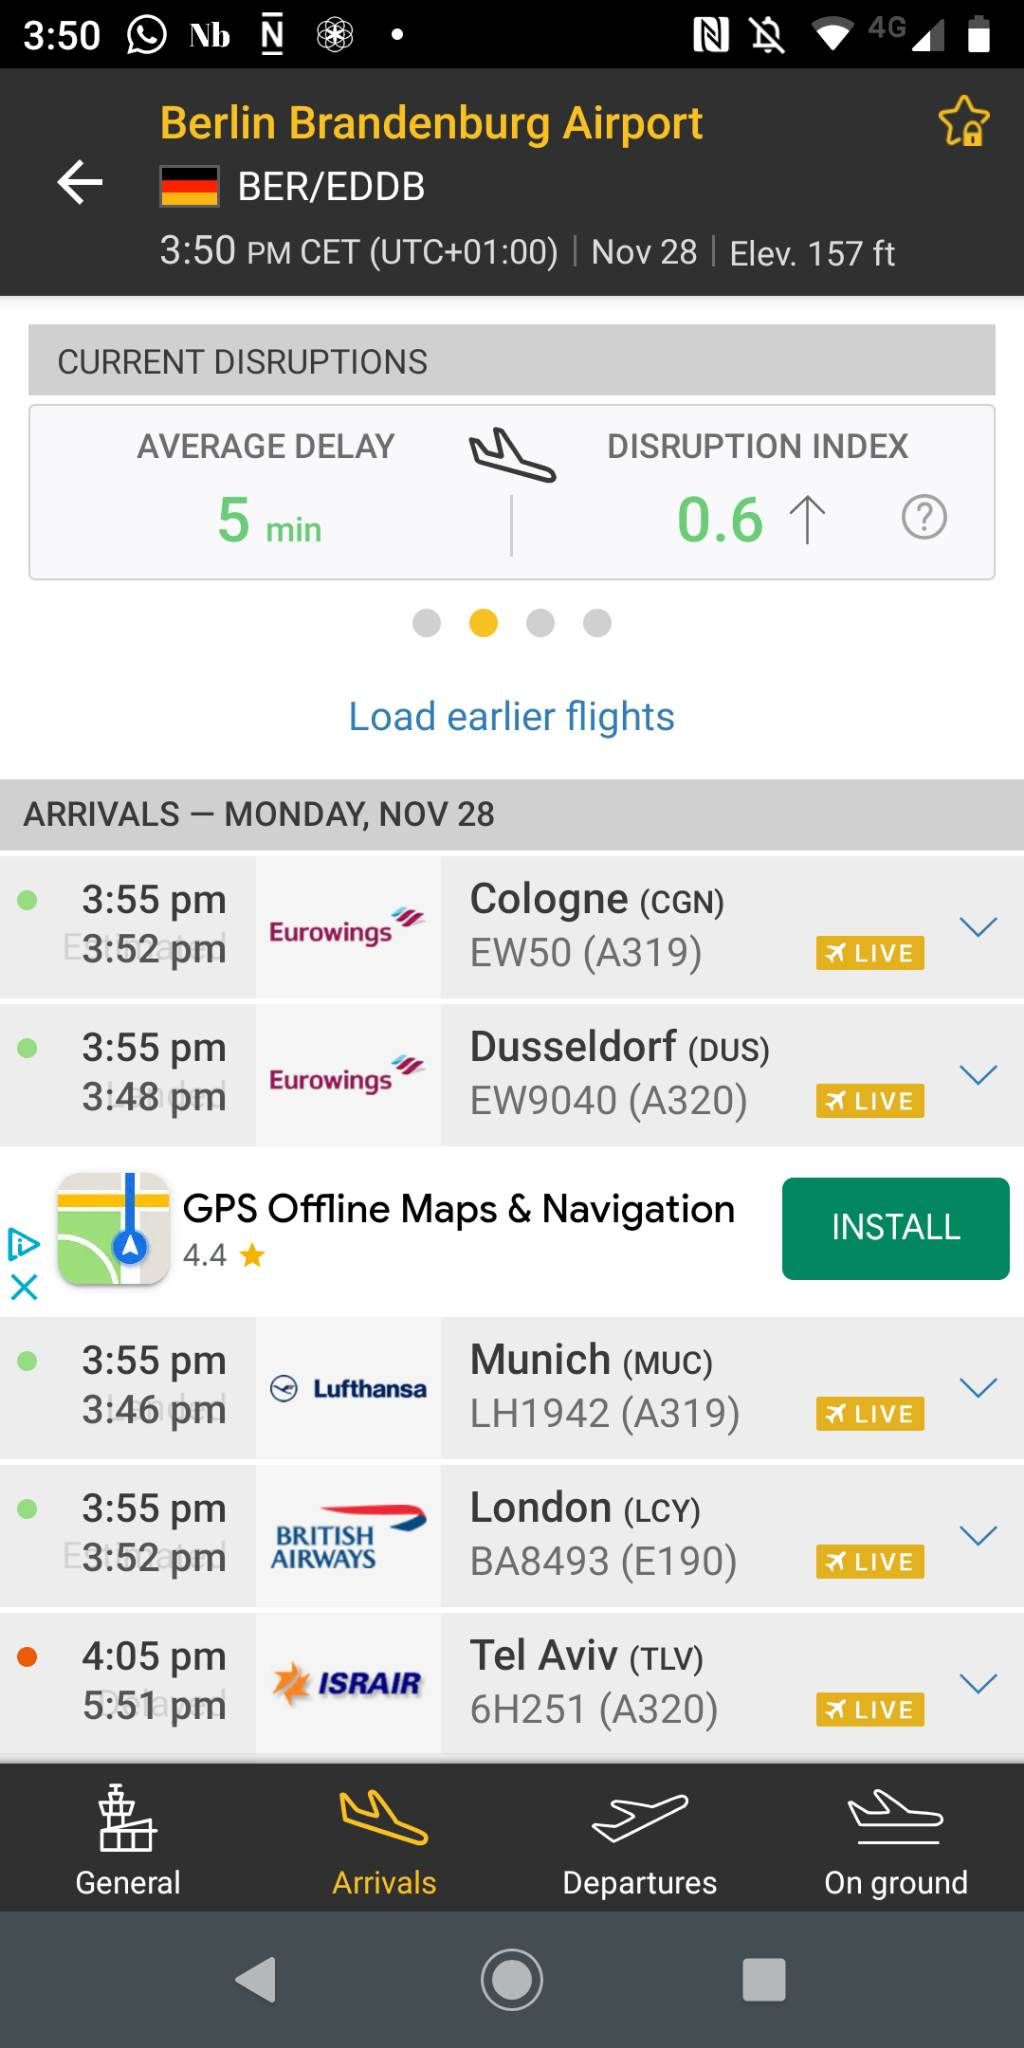 Flightrader24 app showing arrivals and departures screen